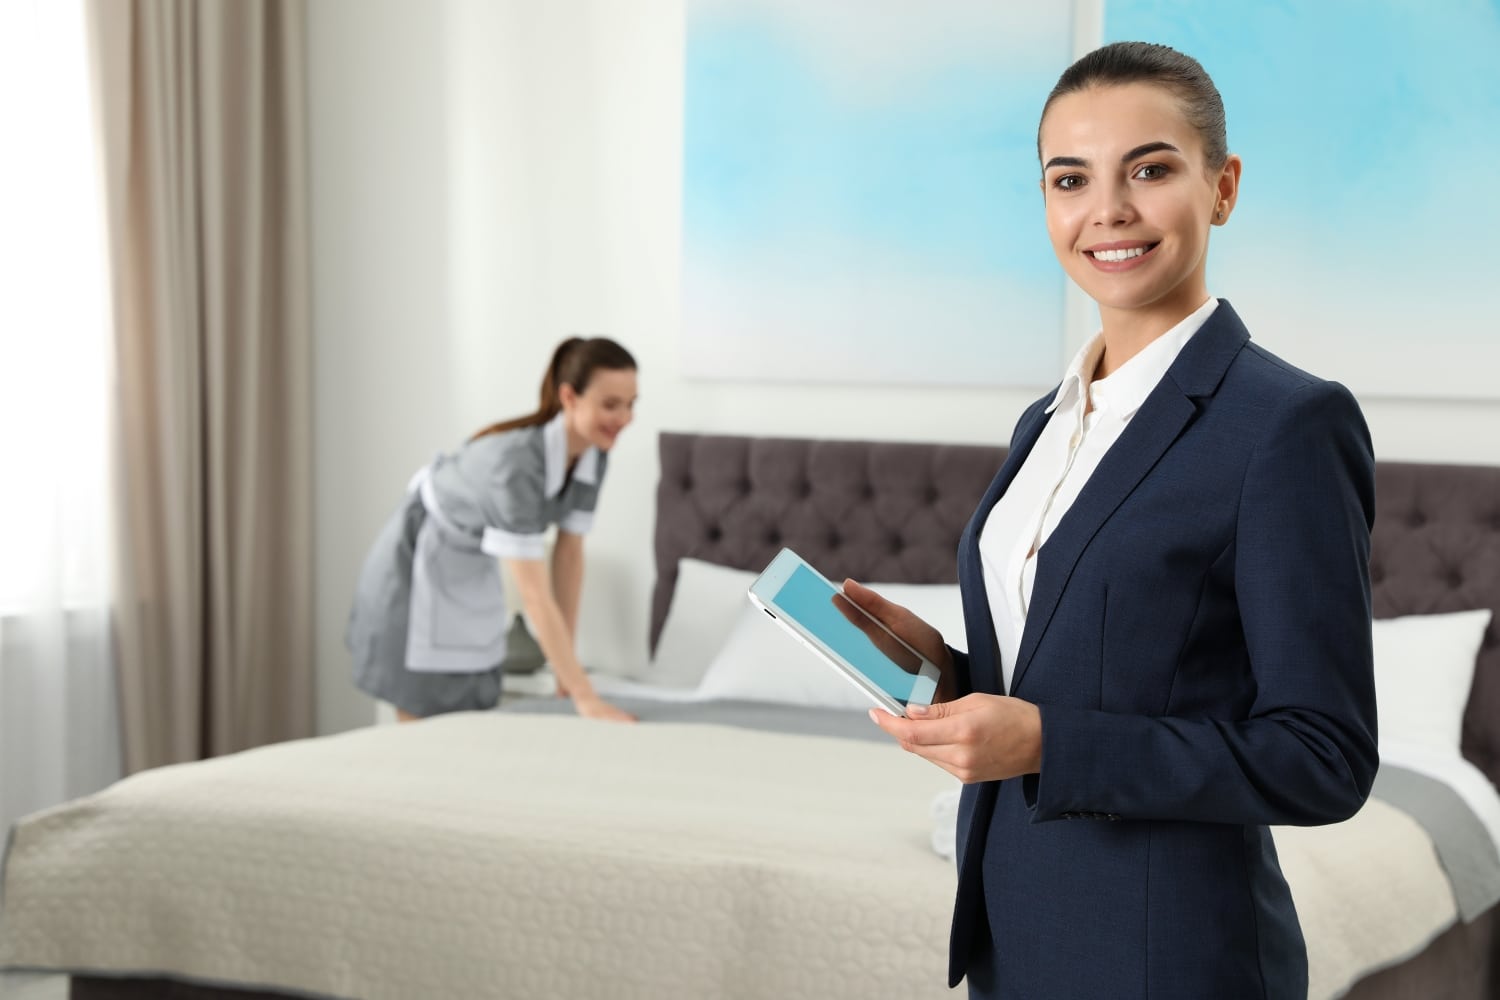 Housekeeping Manager Jobs in Dubai With Visa Sponsorship